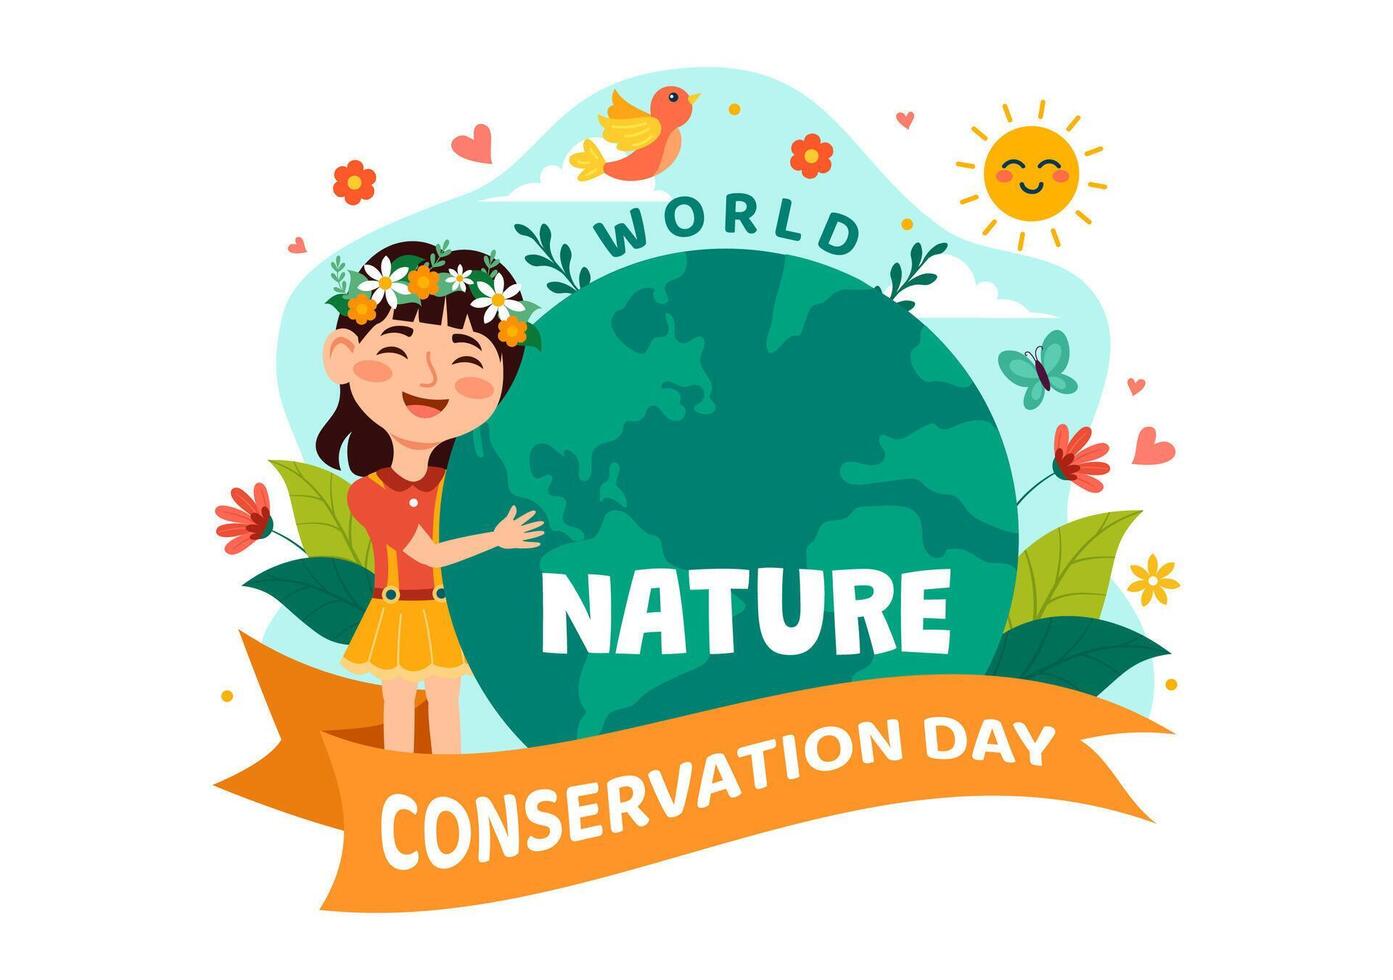 mundo naturaleza conservación día ilustración con mundo mapa, árbol y eco simpático ecología para preservación en plano dibujos animados antecedentes vector